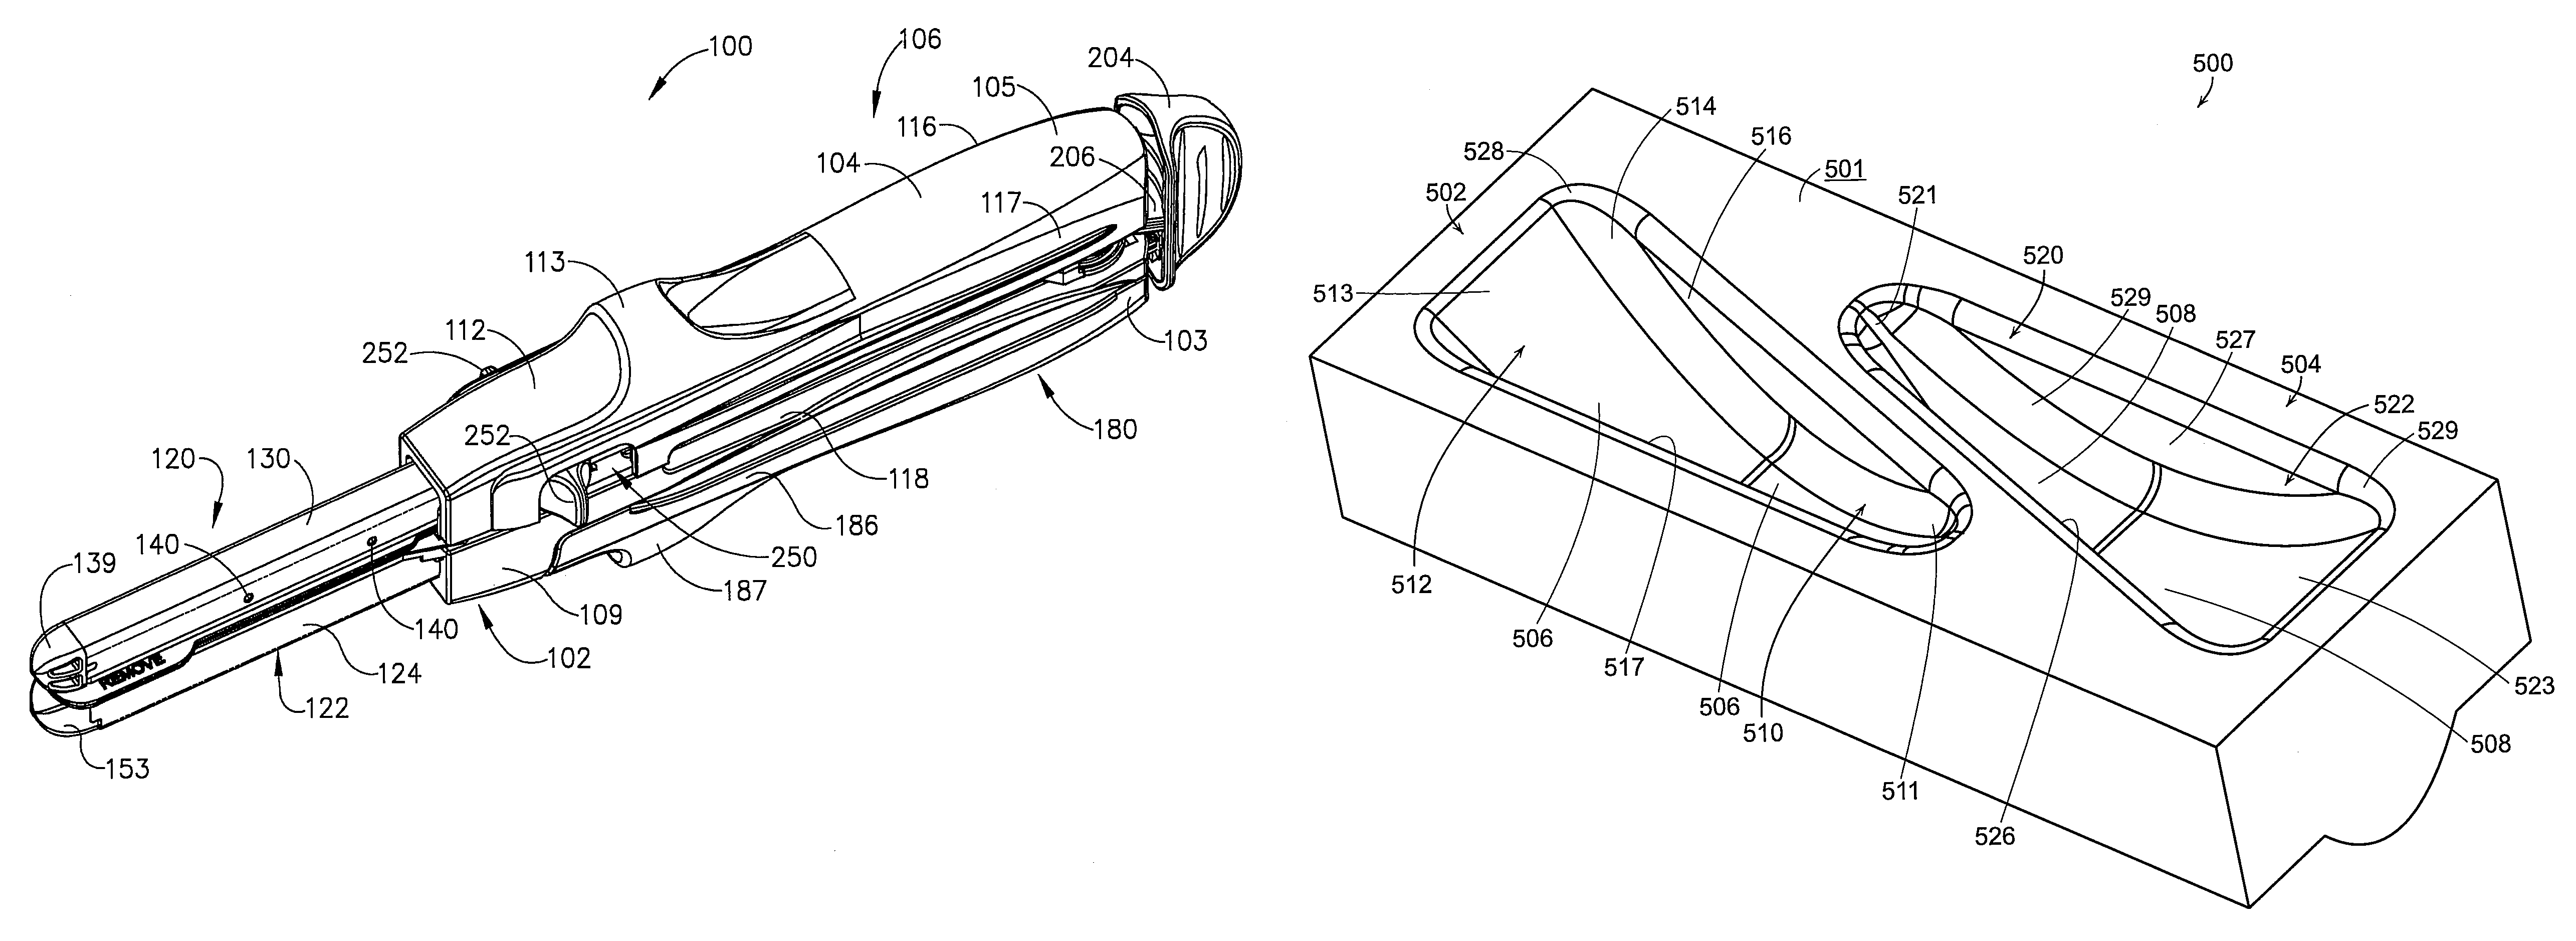 Surgical stapler comprising a staple pocket